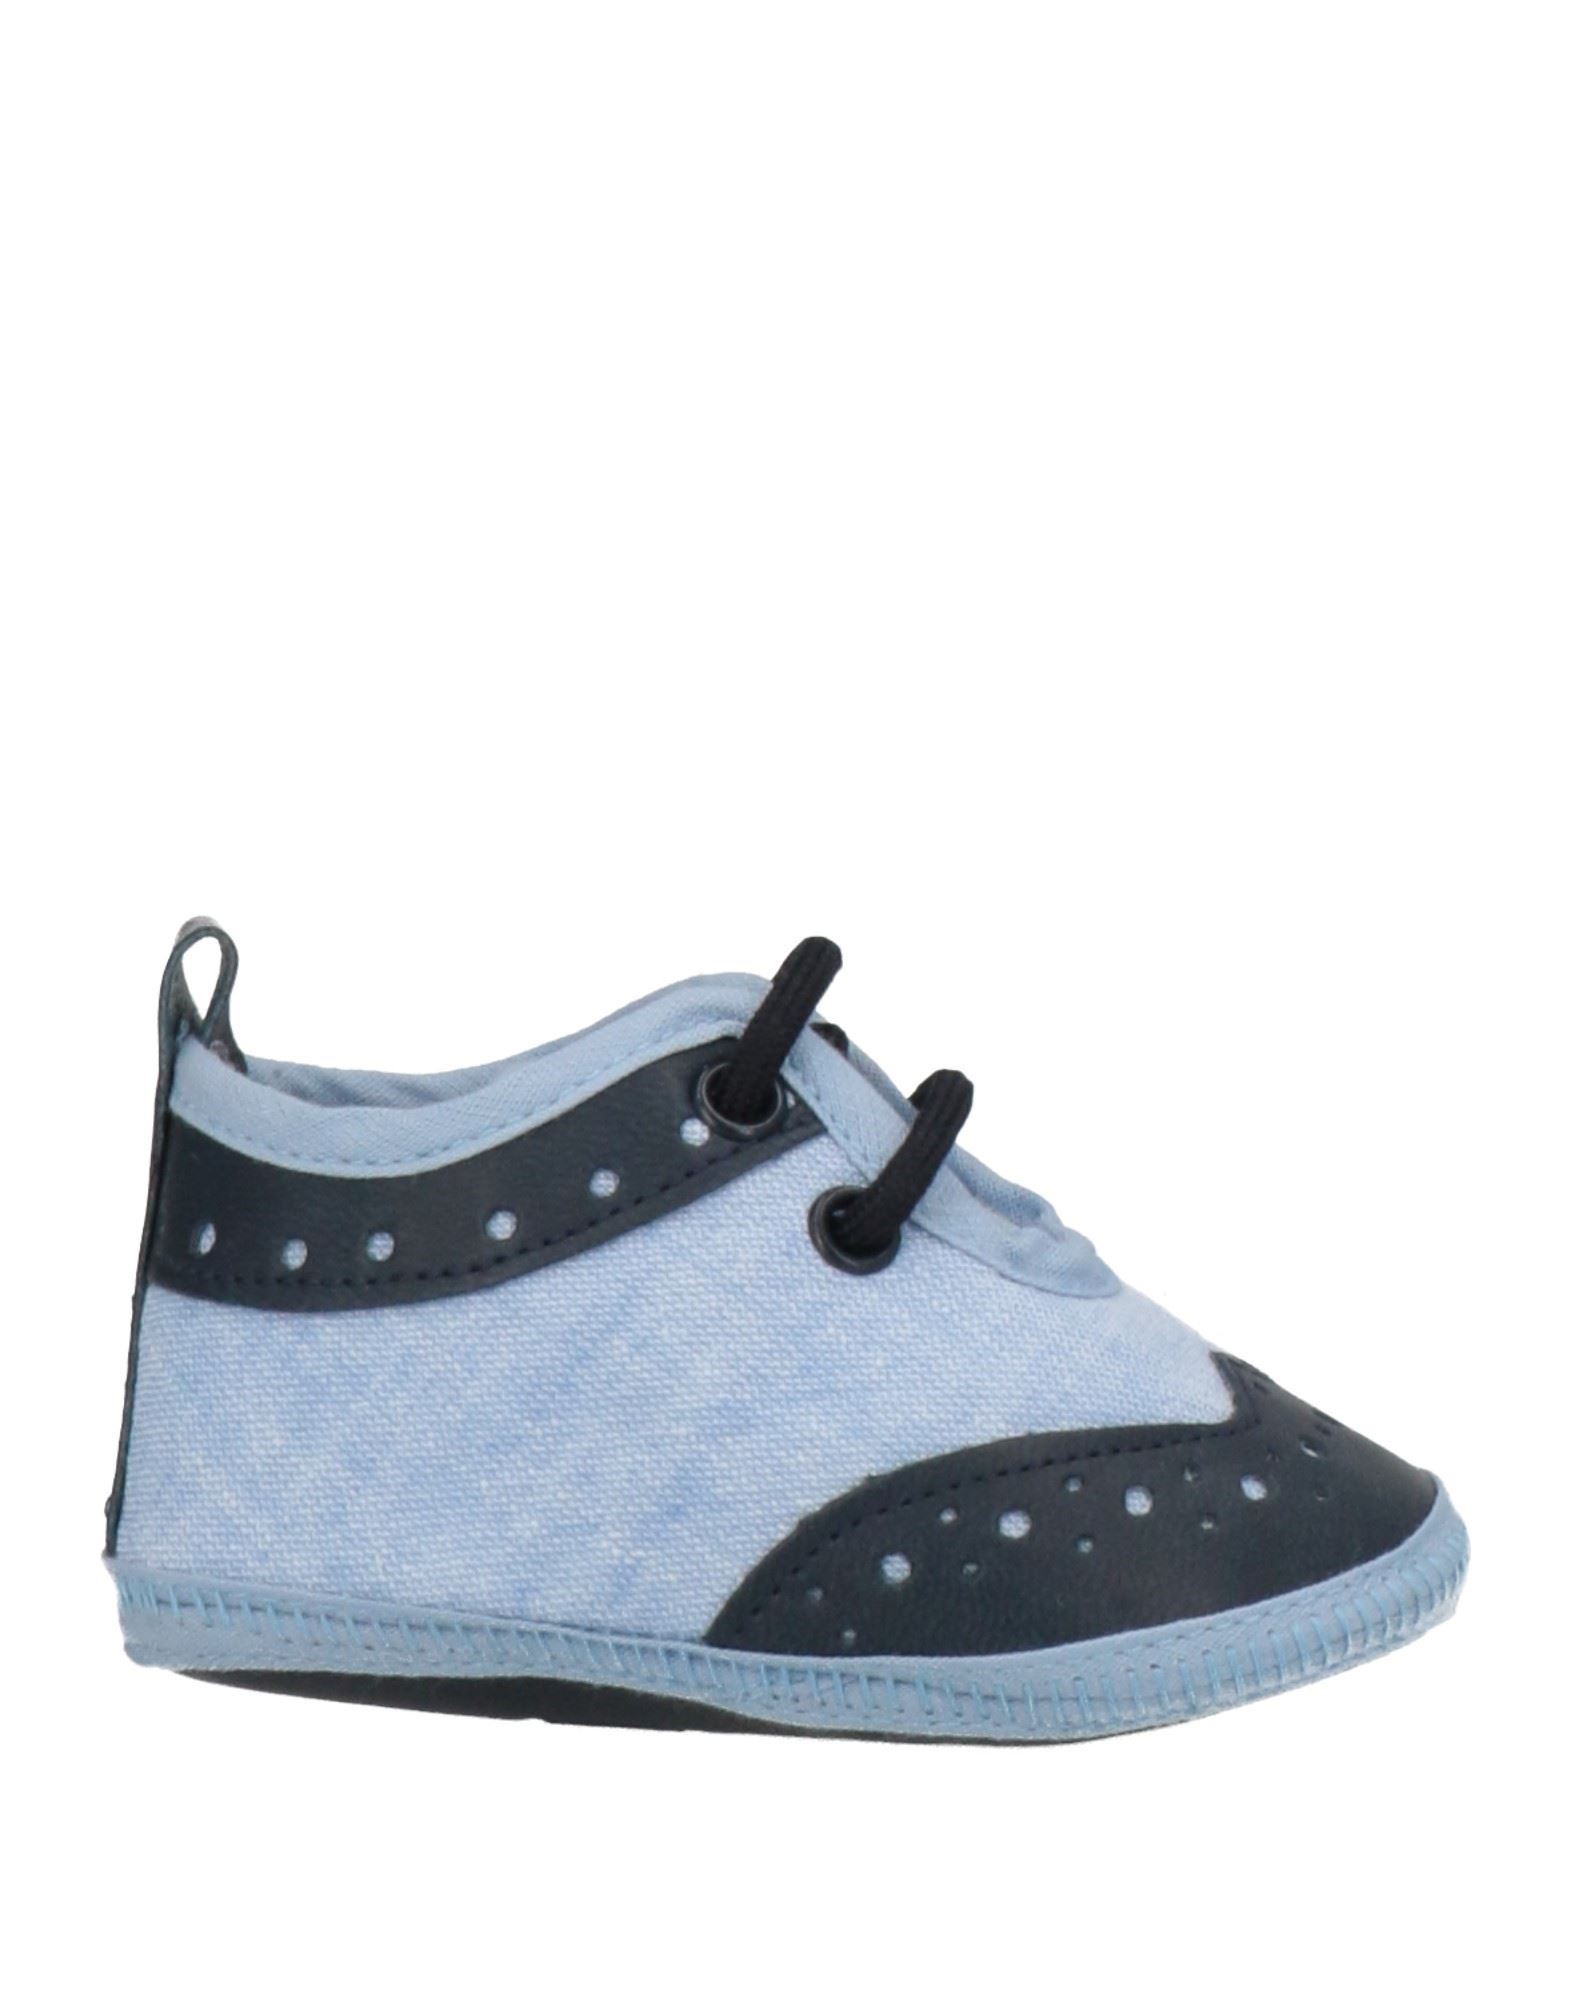 CARLO PIGNATELLI Schuhe Für Neugeborene Kinder Hellblau von CARLO PIGNATELLI